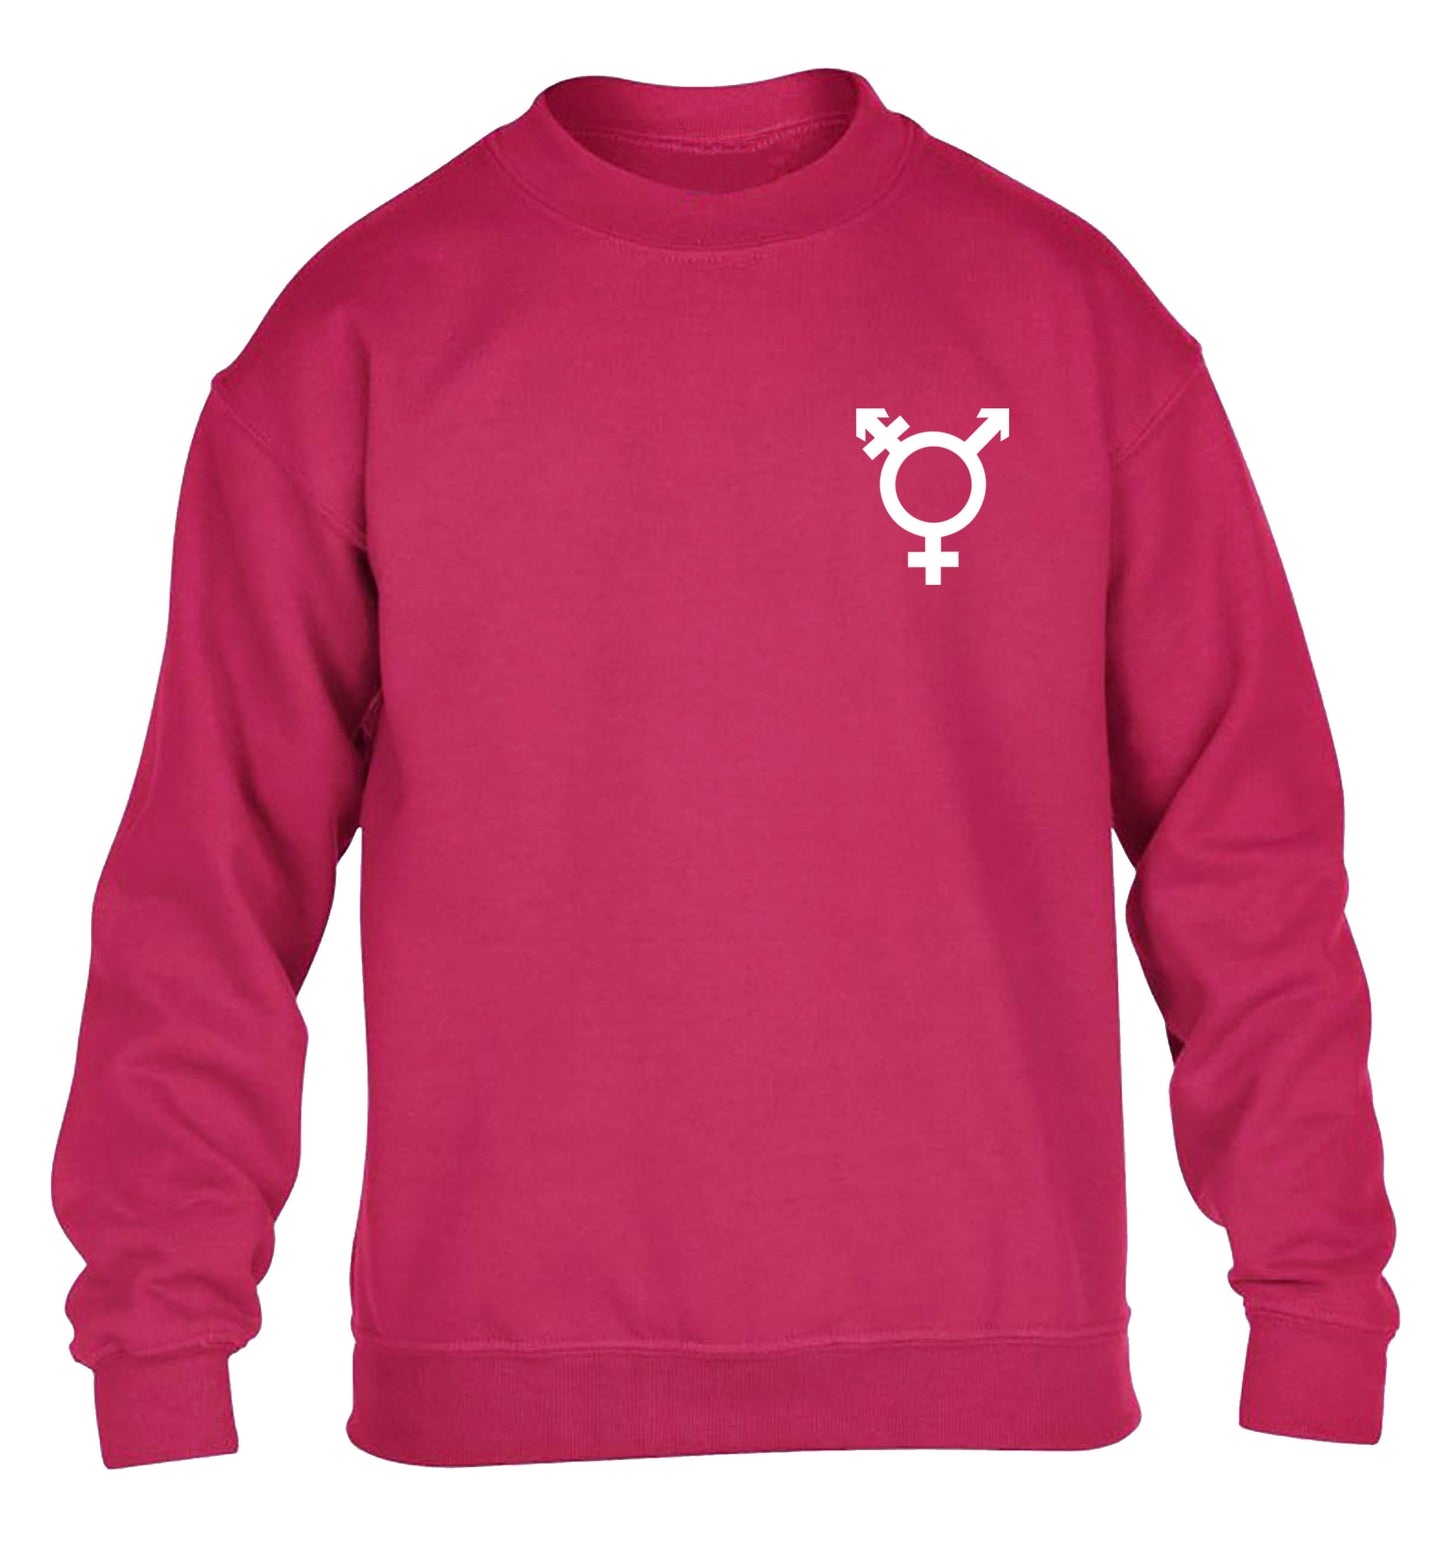 Trans gender symbol pocket children's pink sweater 12-14 Years